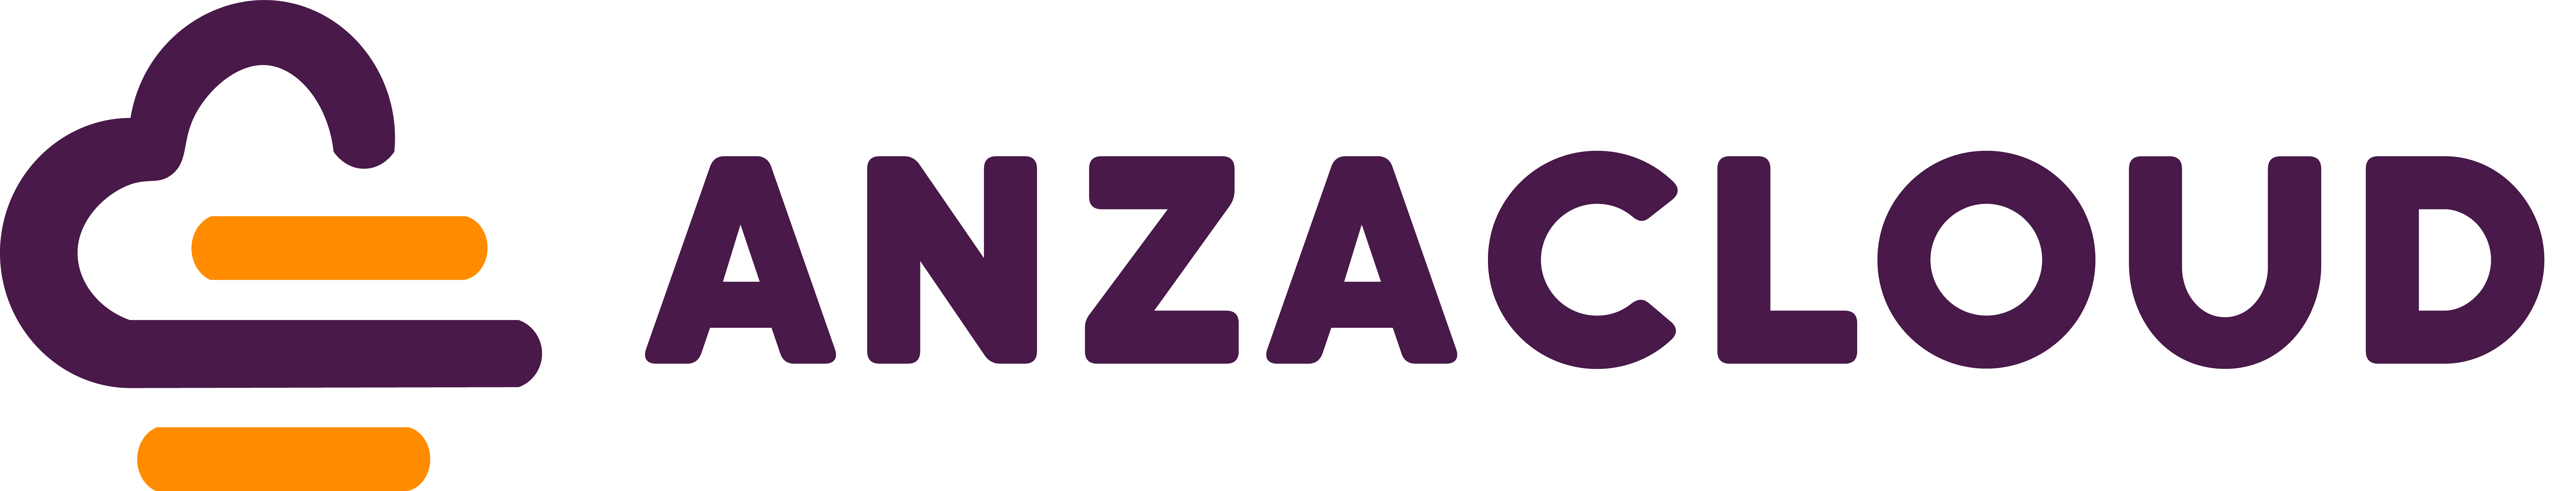 anza cloud logo